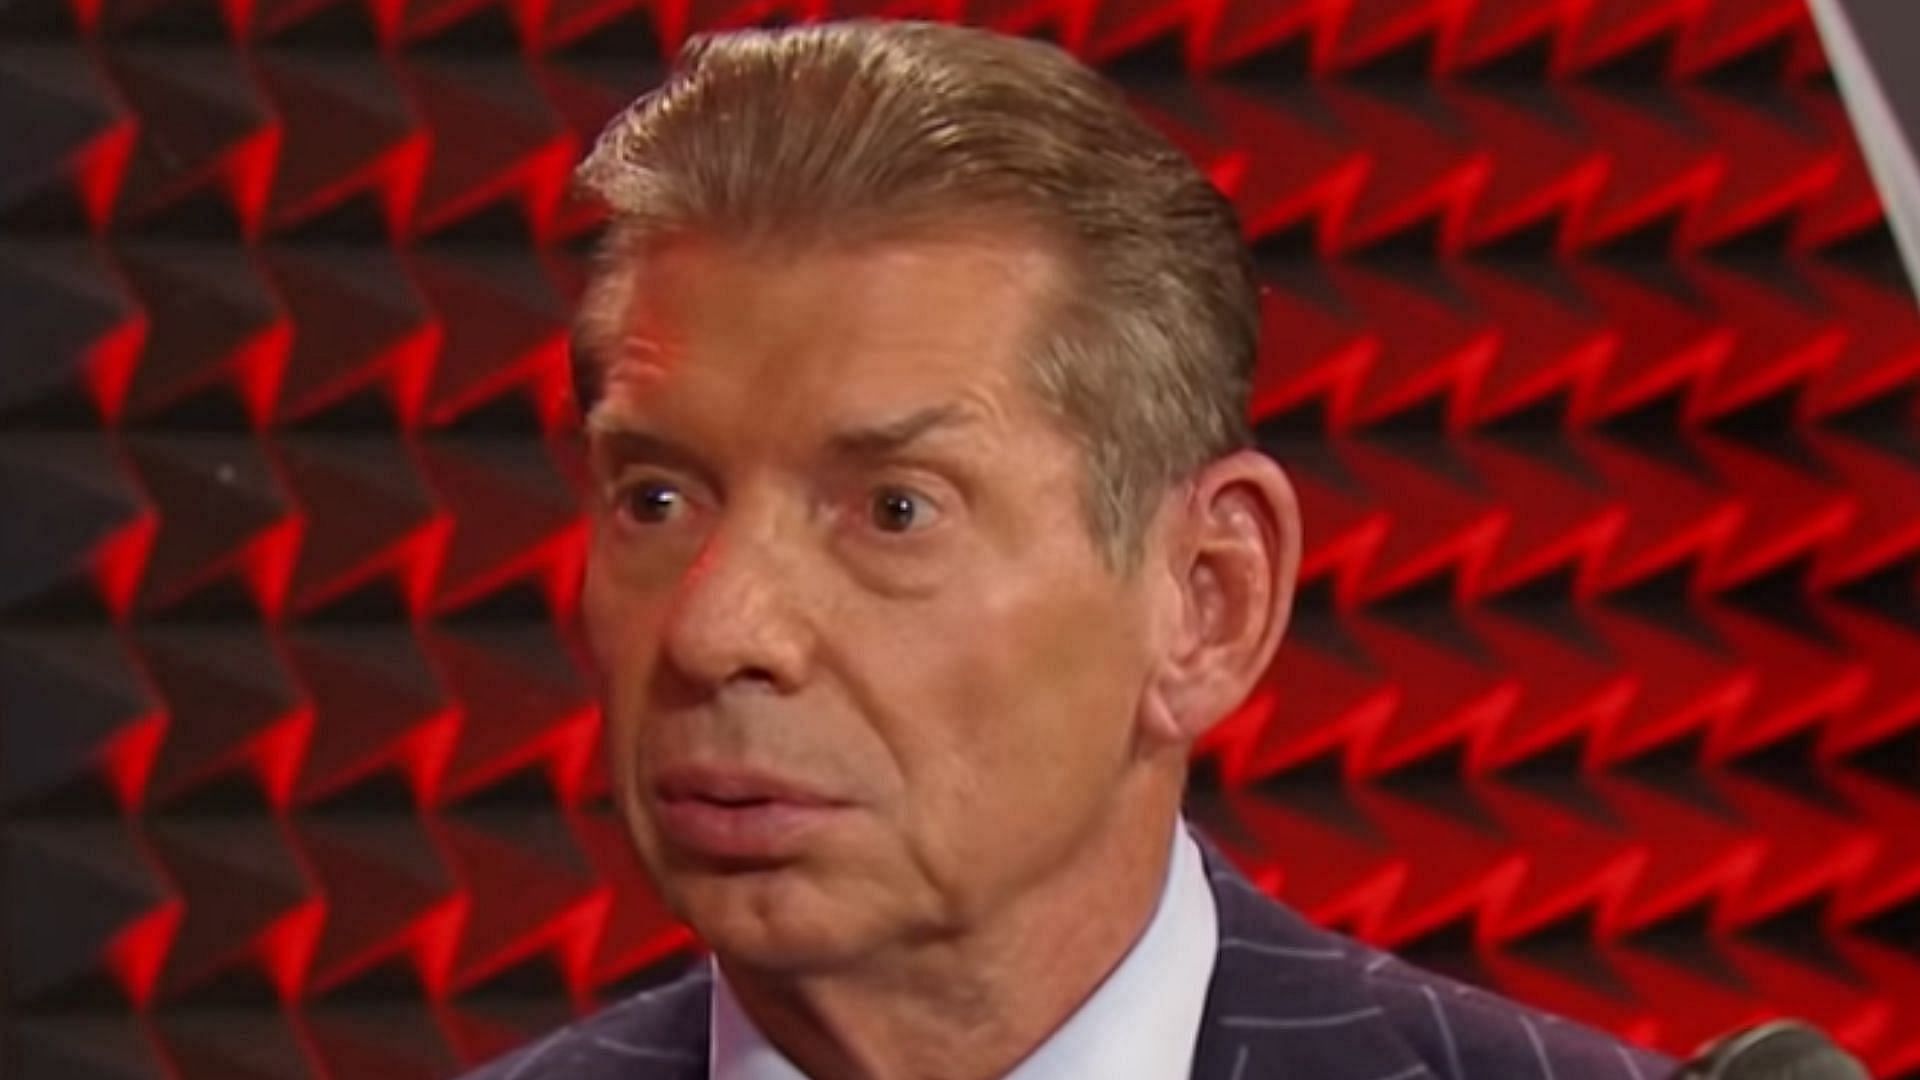 Vince McMahon led WWE